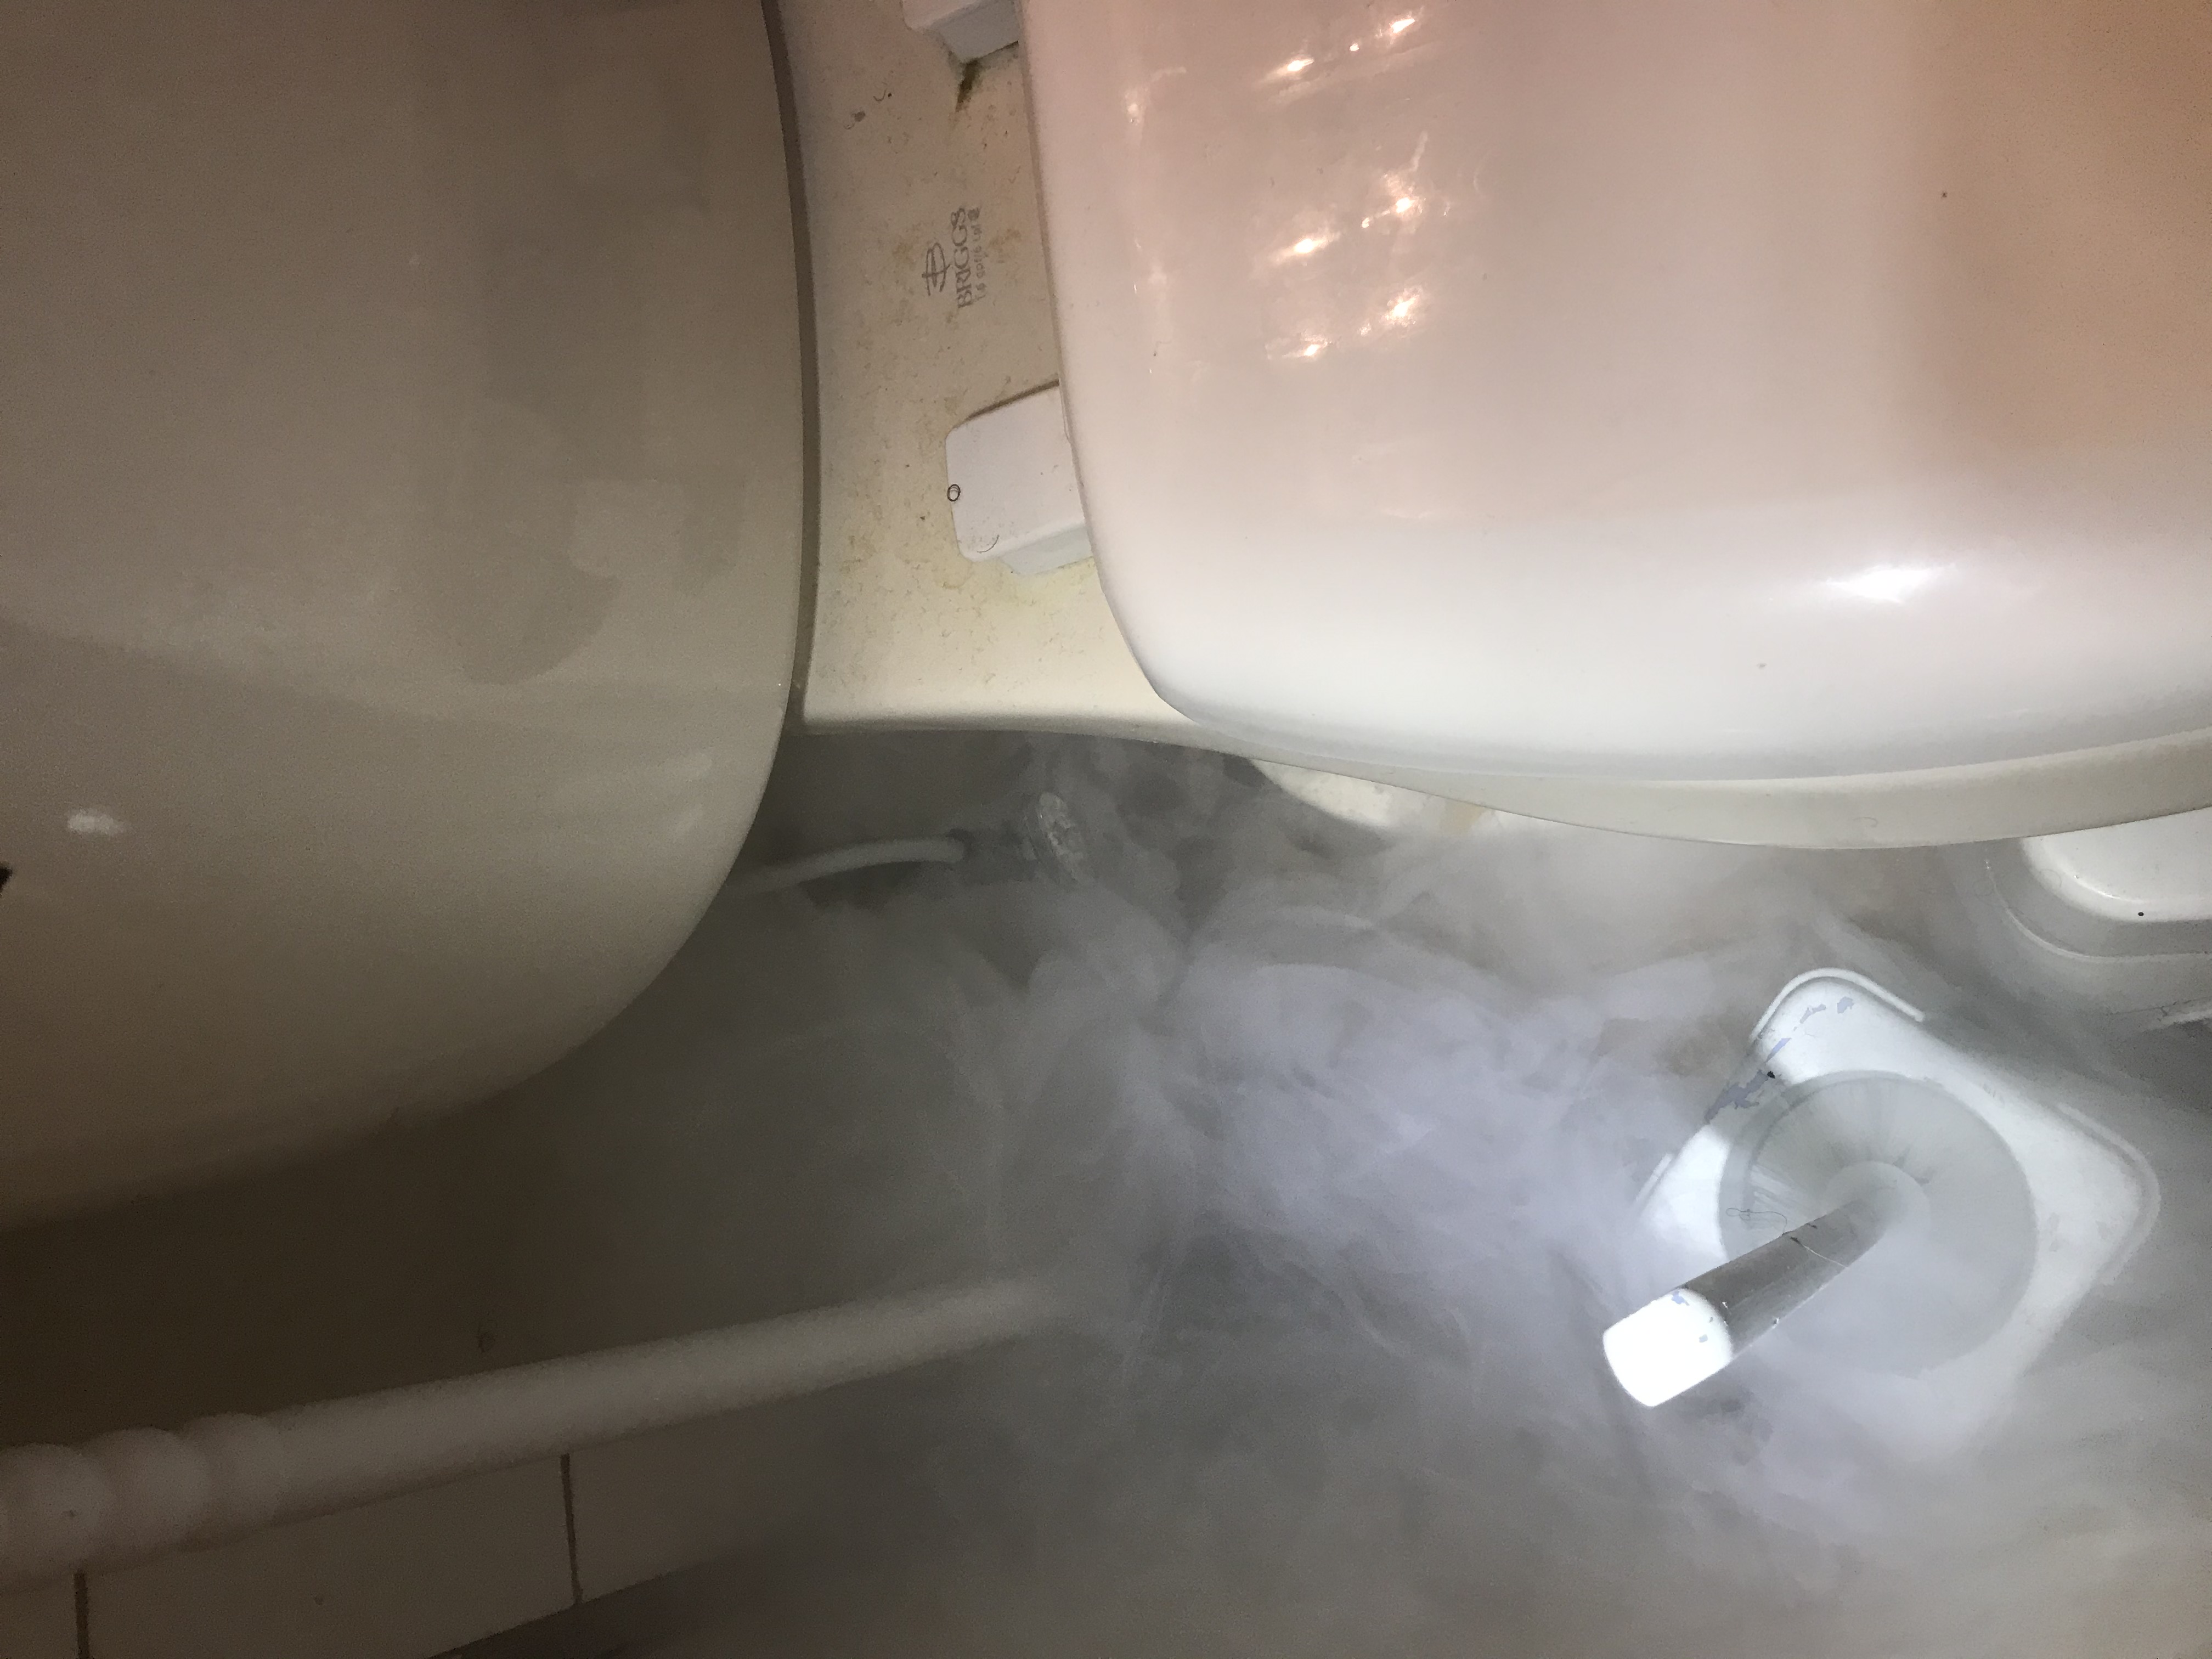 smoke rising from bottom of toilet